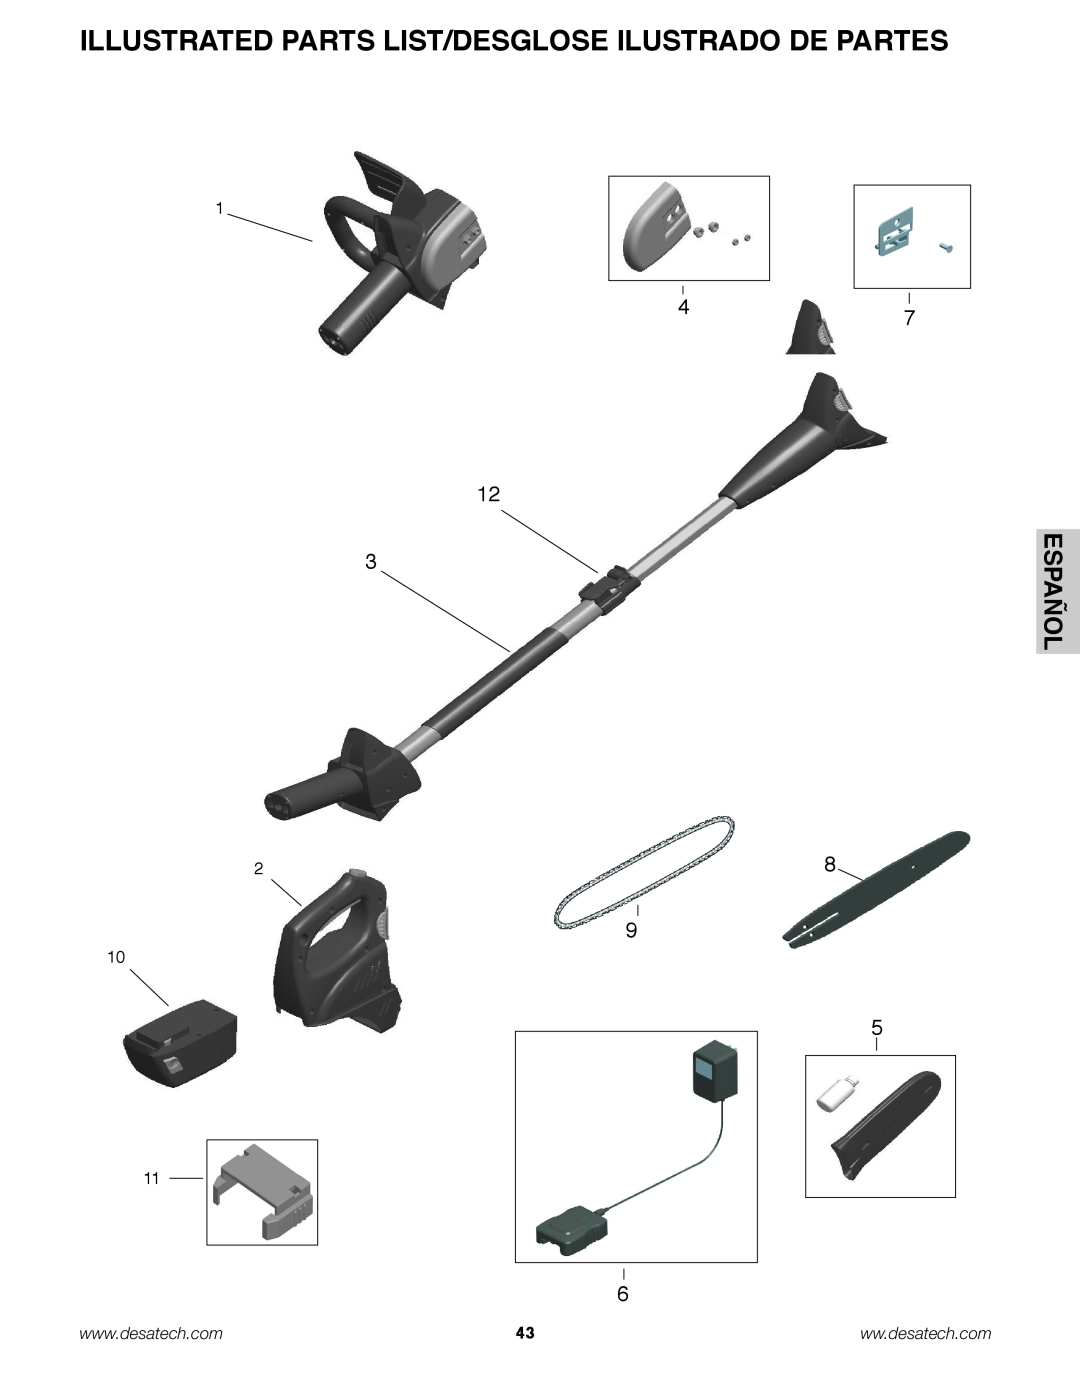 Remington Power Tools BS188A, BPS188A, BS188A owner manual Illustrated Parts List/Desglose Ilustrado De Partes, Español 